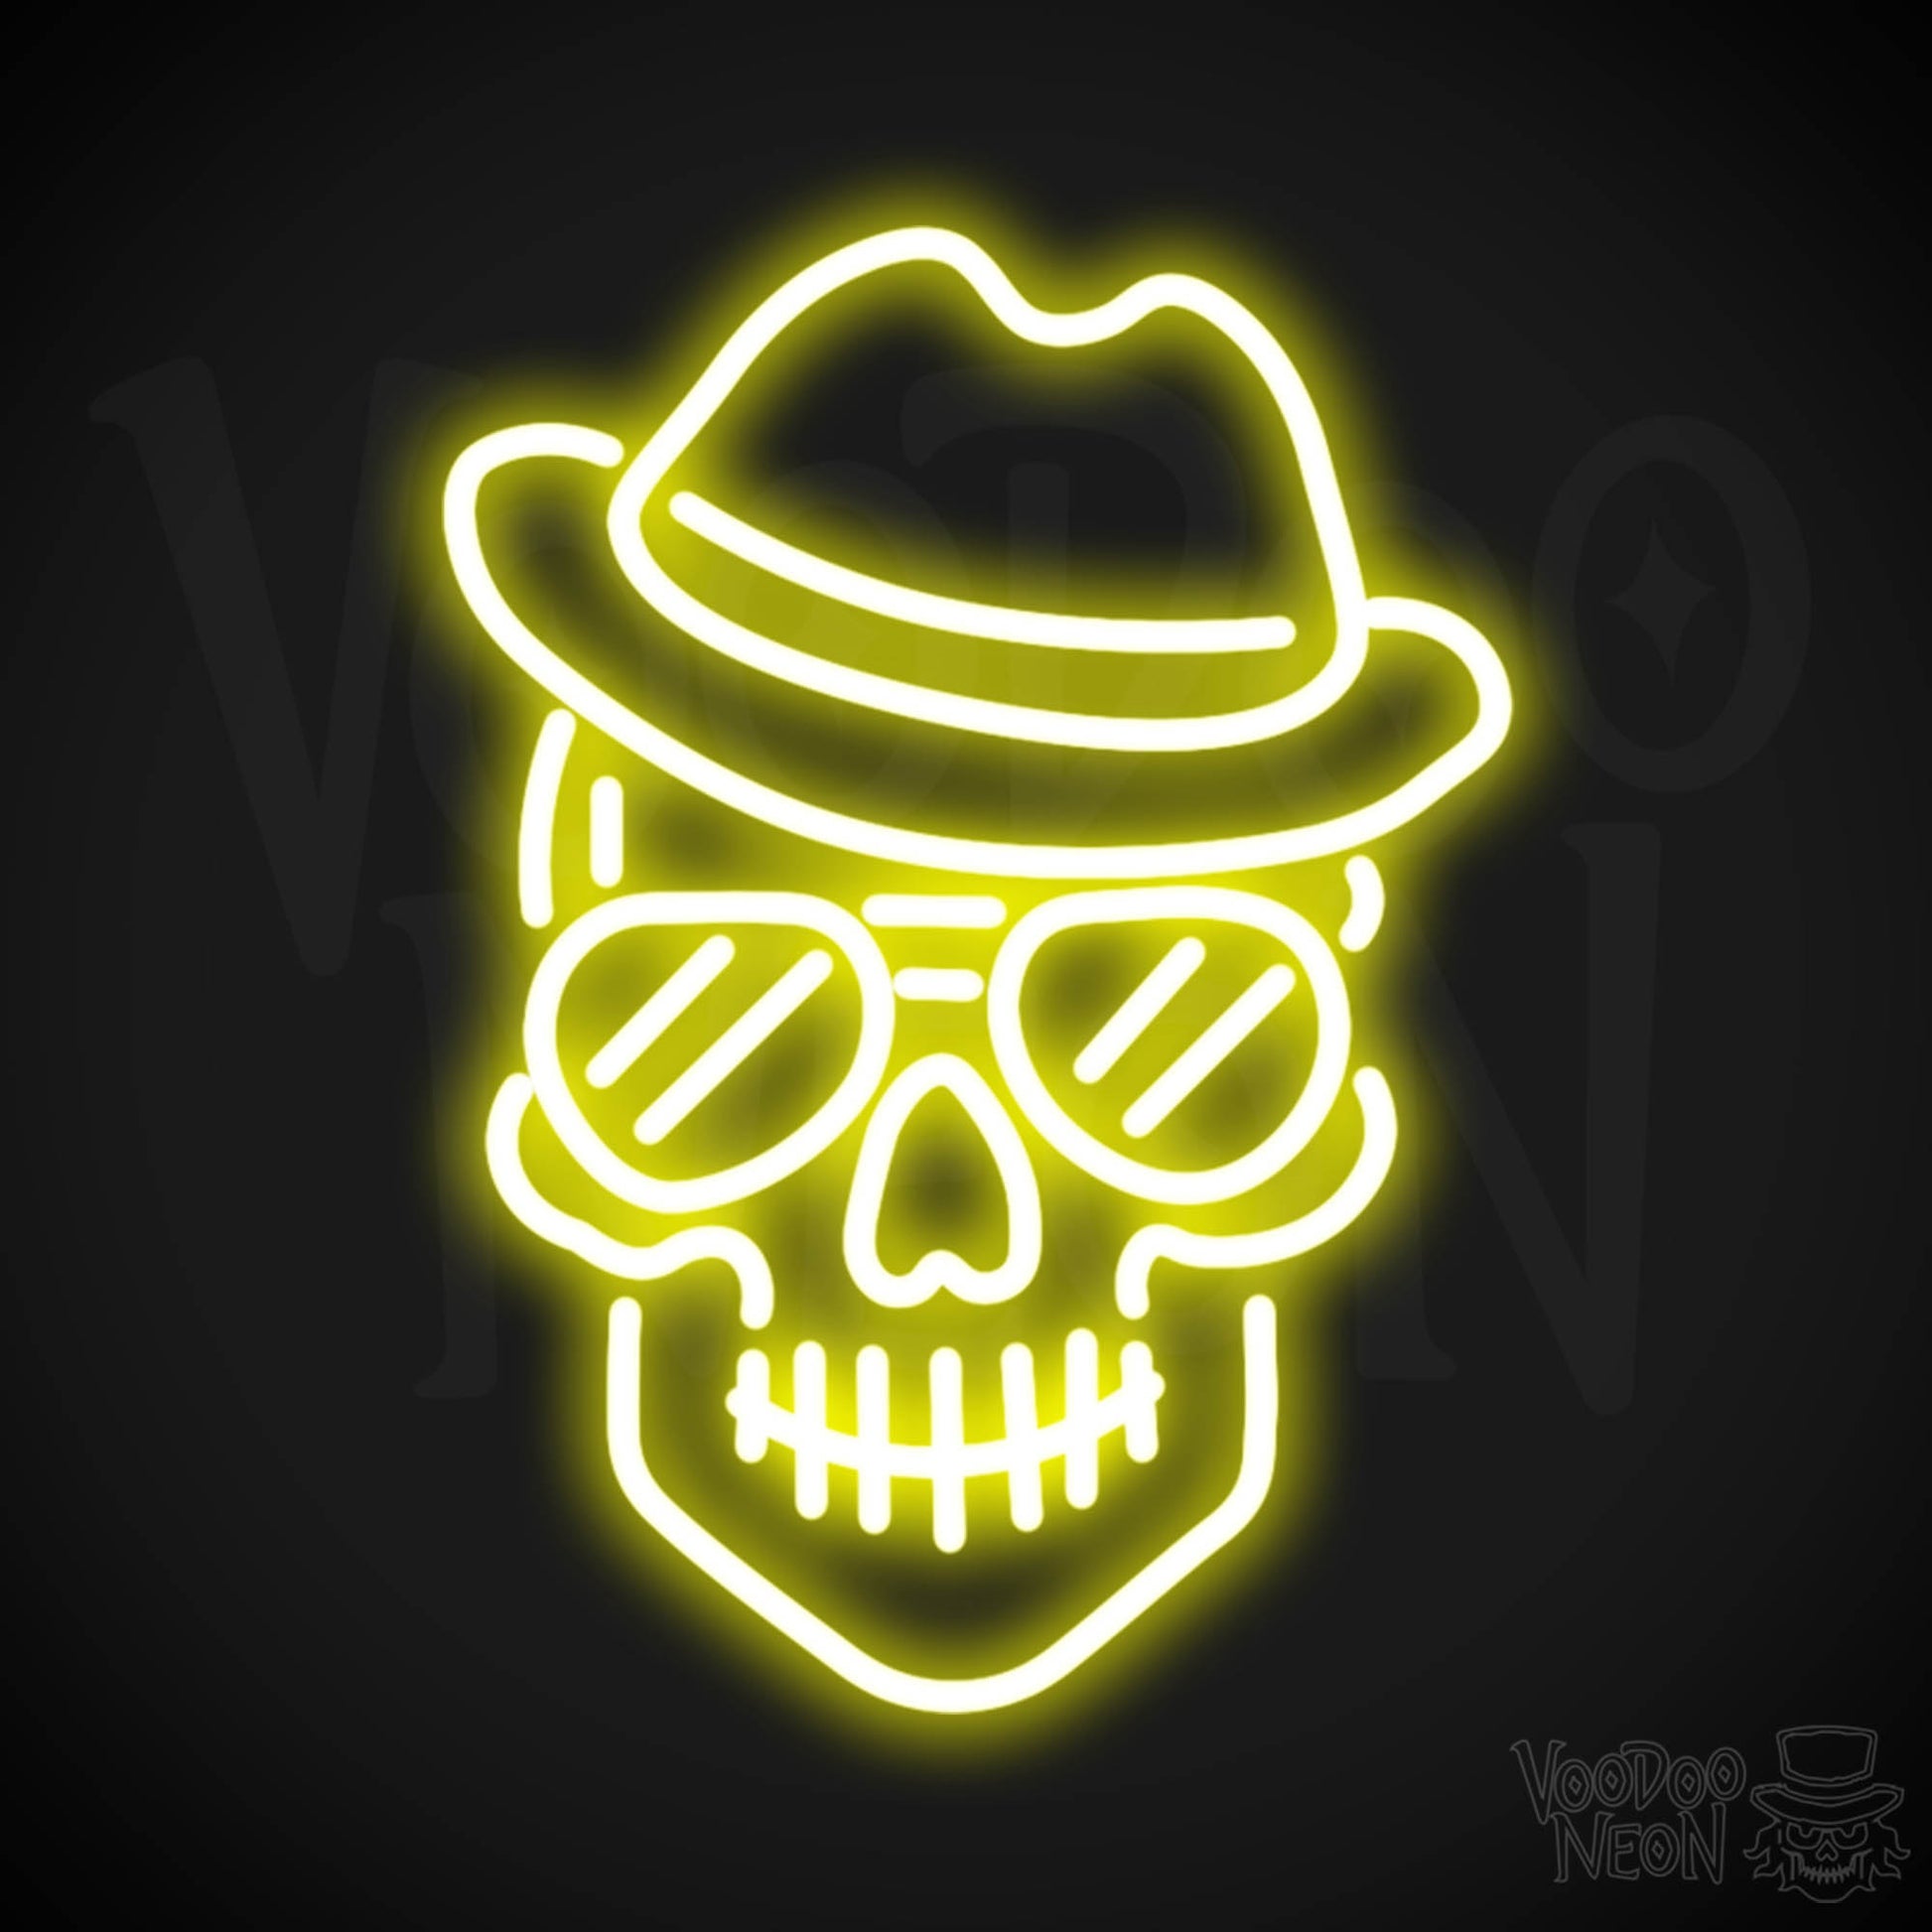 Skull Face Neon Sign - Neon Skull Face Sign - Neon Skull Light - Wall Art - Color Yellow